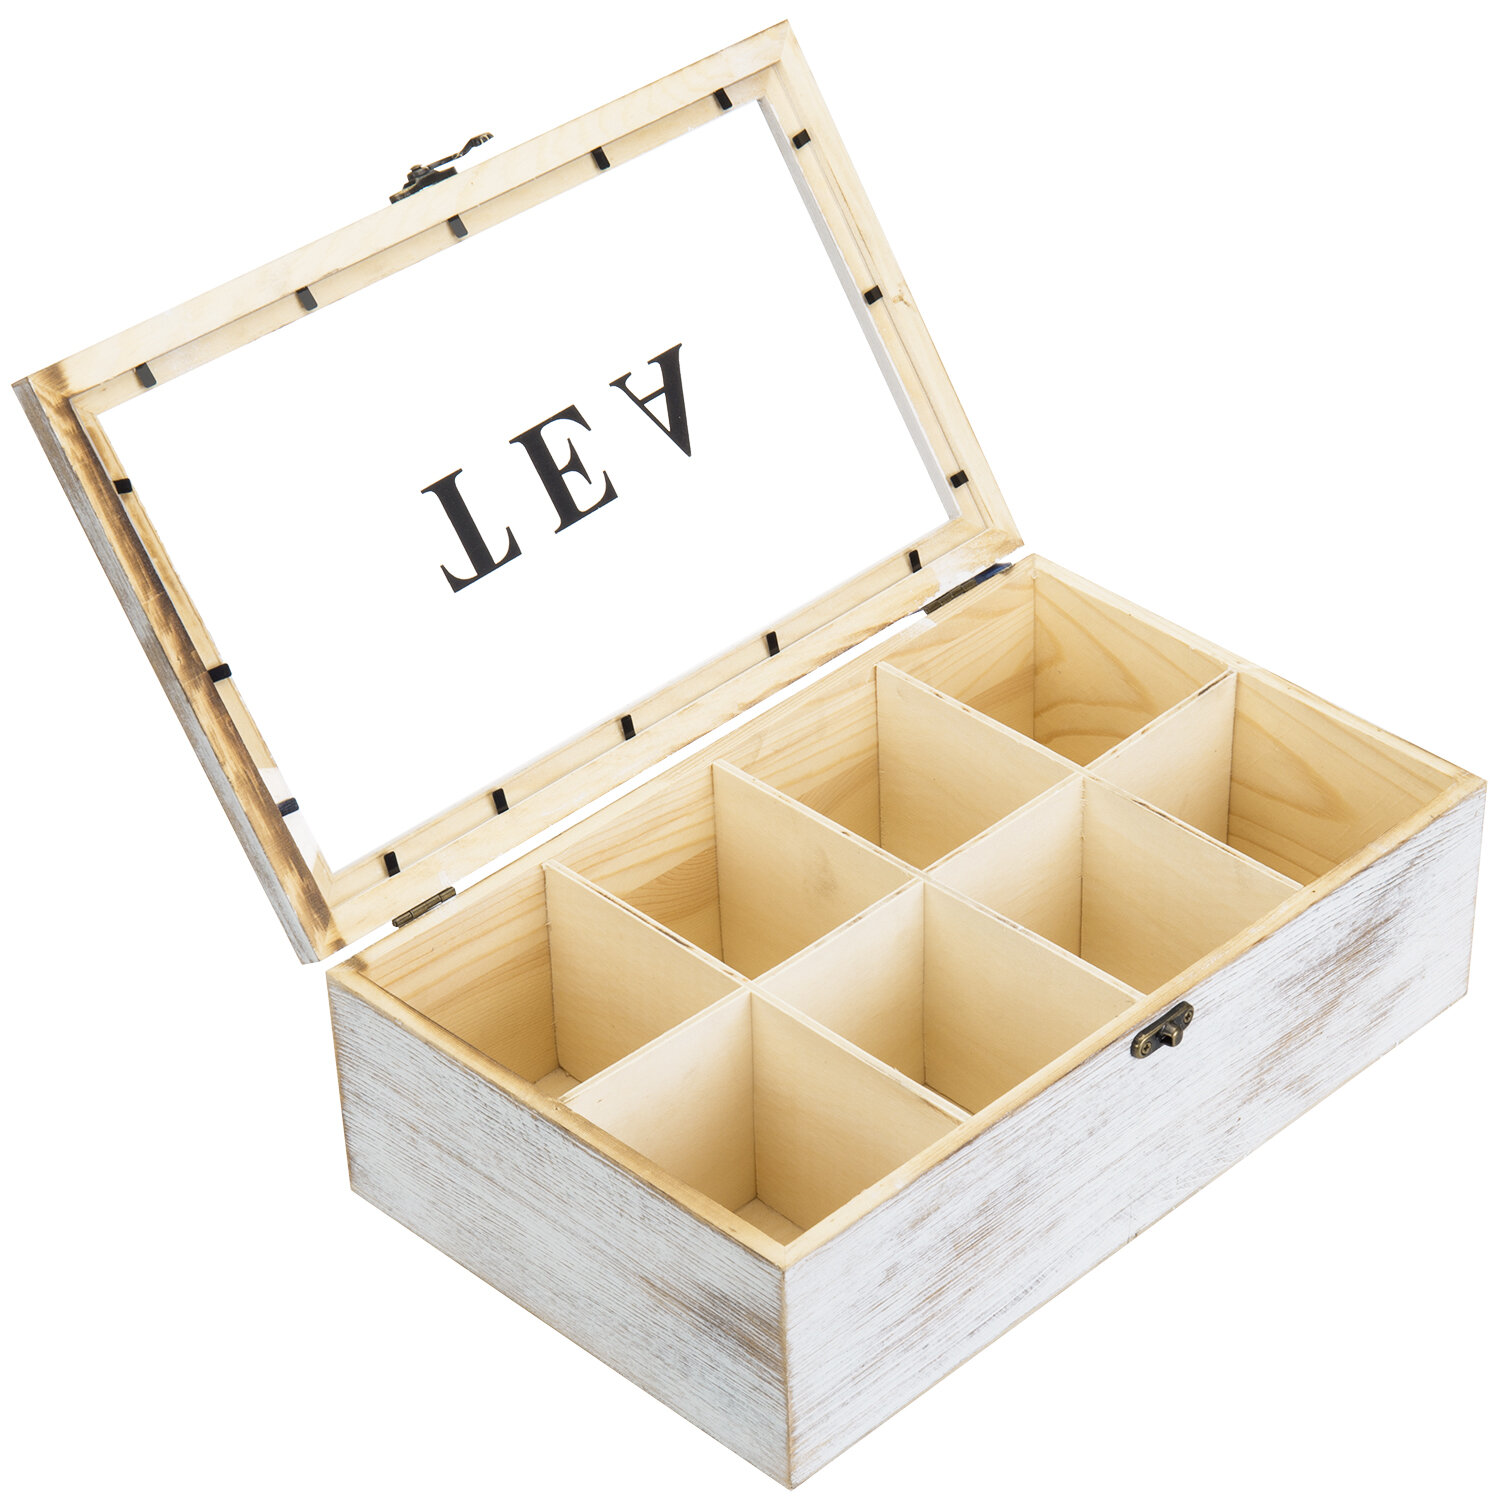 Lifewit Plastic Tea Box & Reviews